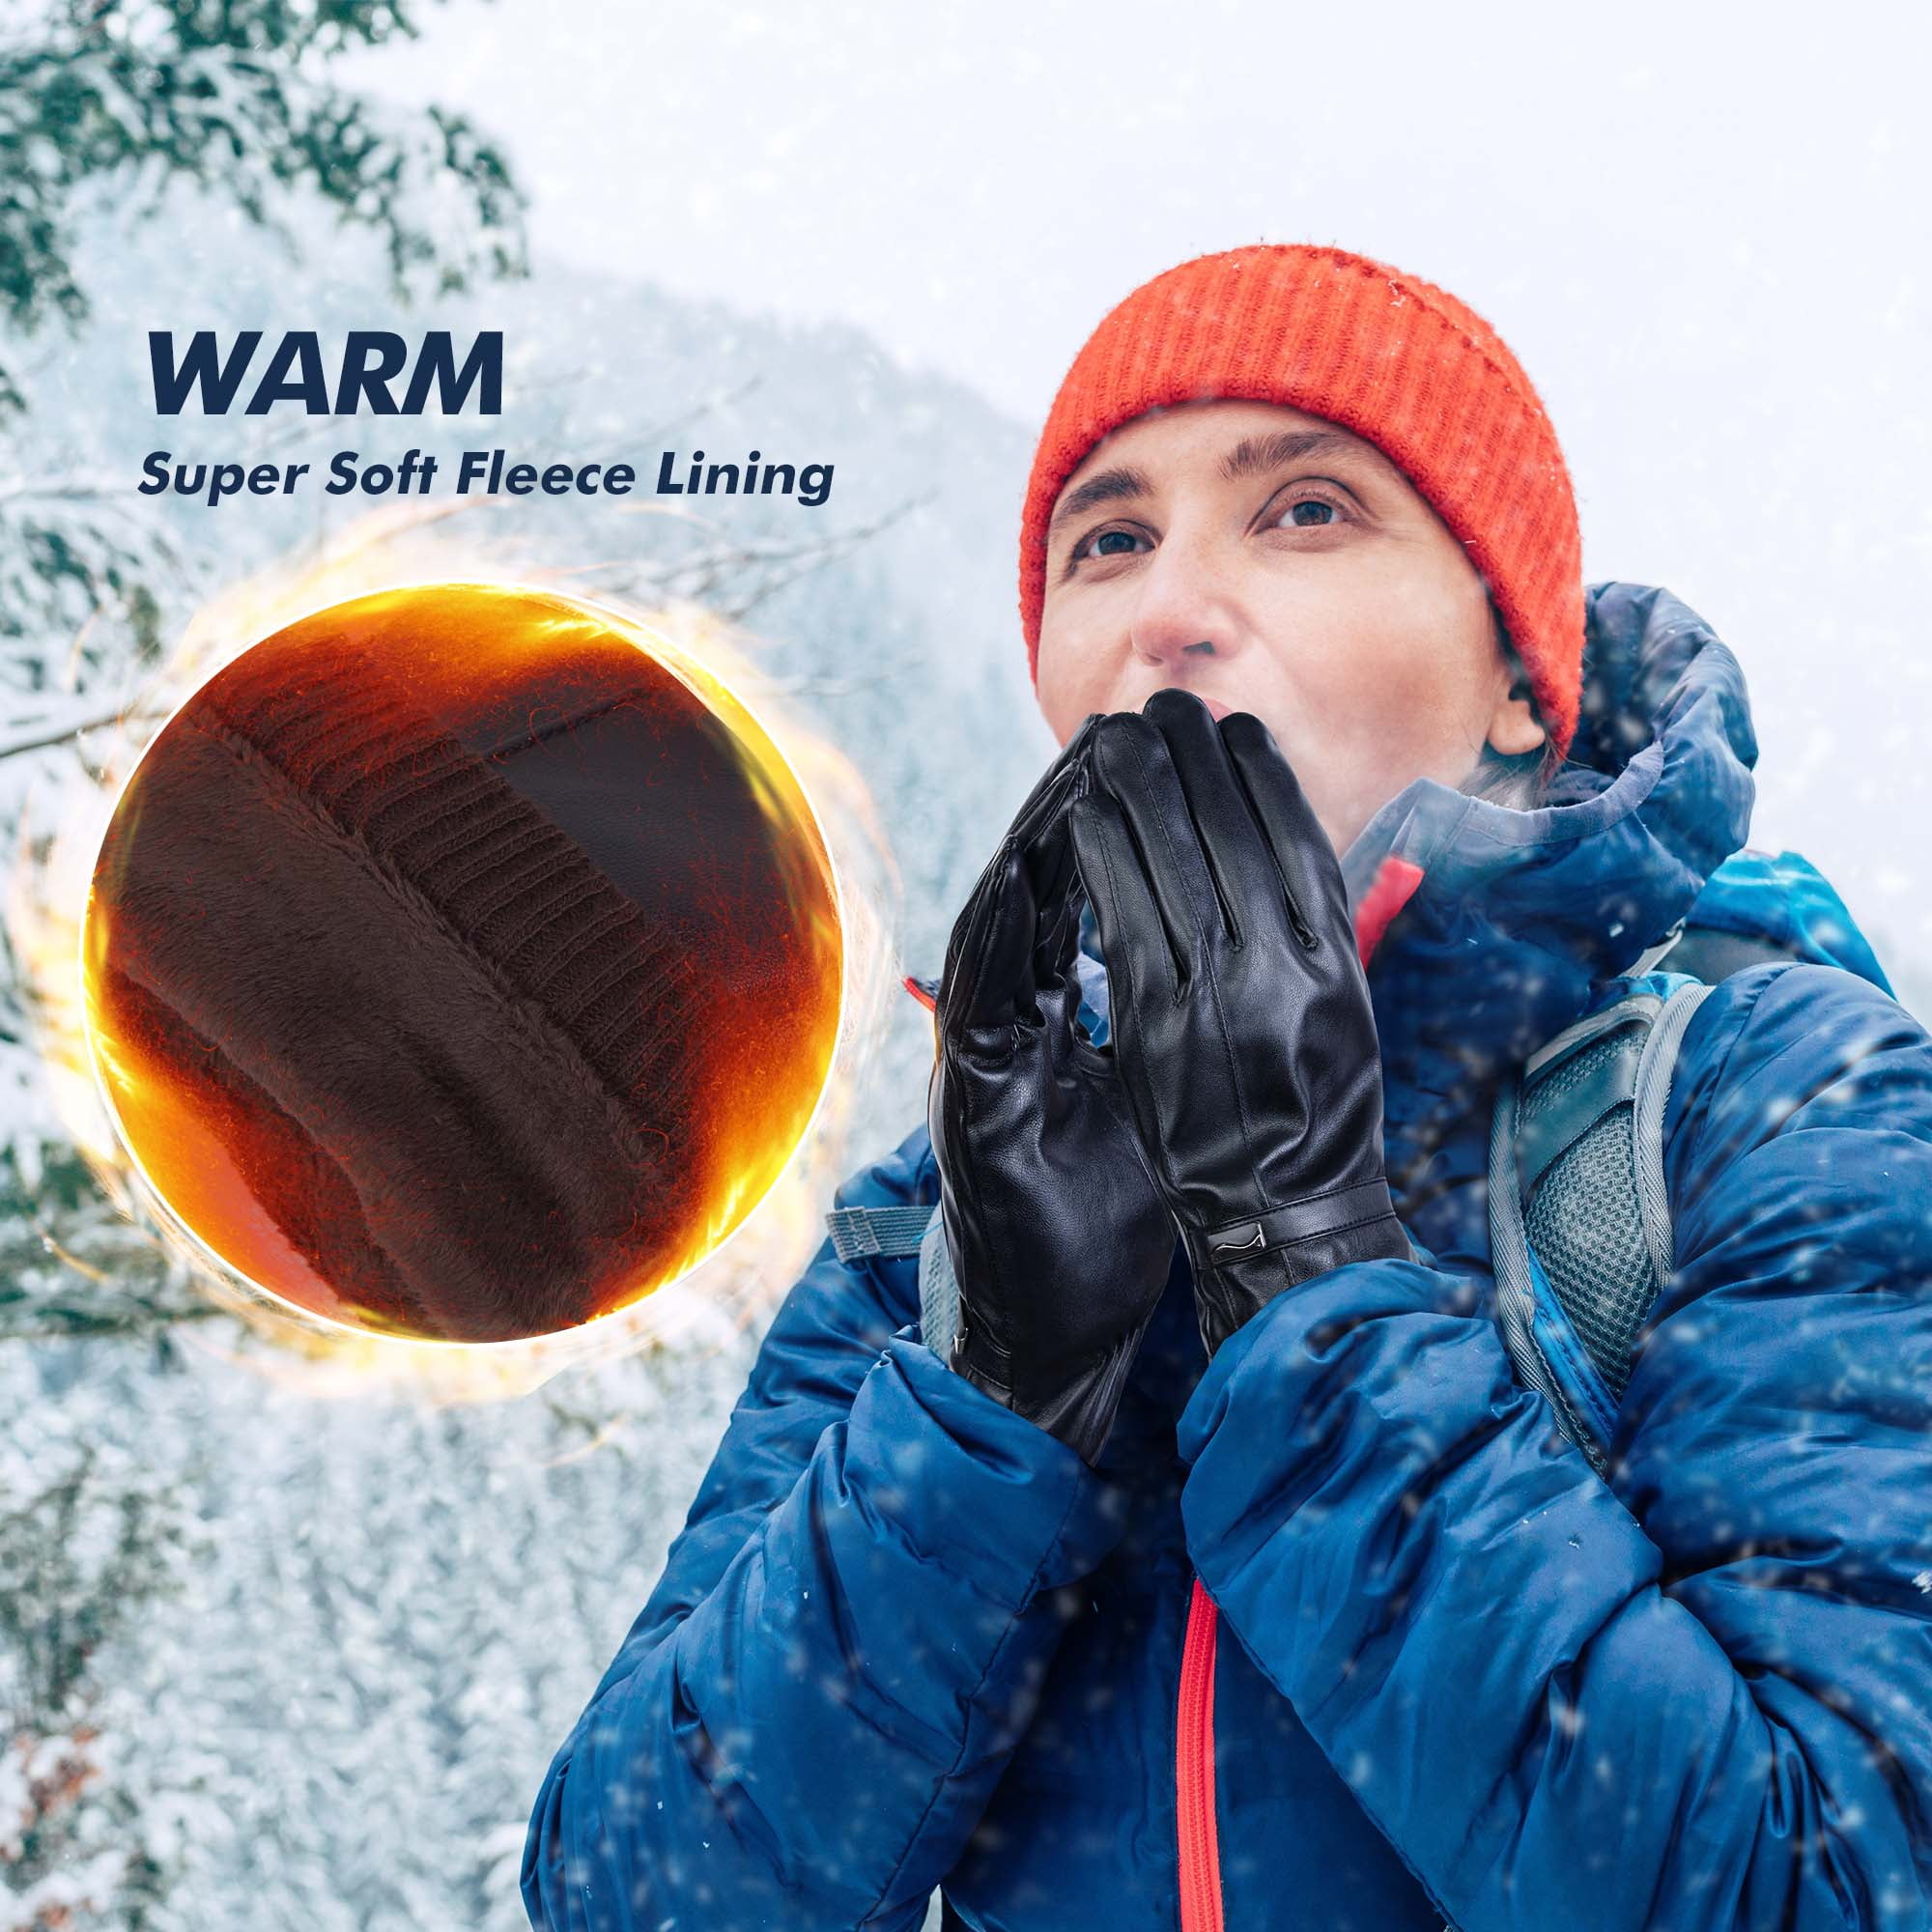 Cfxnmzgr Winter Sports Equipment Men Winter Gloves Warm Touchscreen Gloves Windproof Gloves for Men, Adult Unisex, Size: One size, Clear